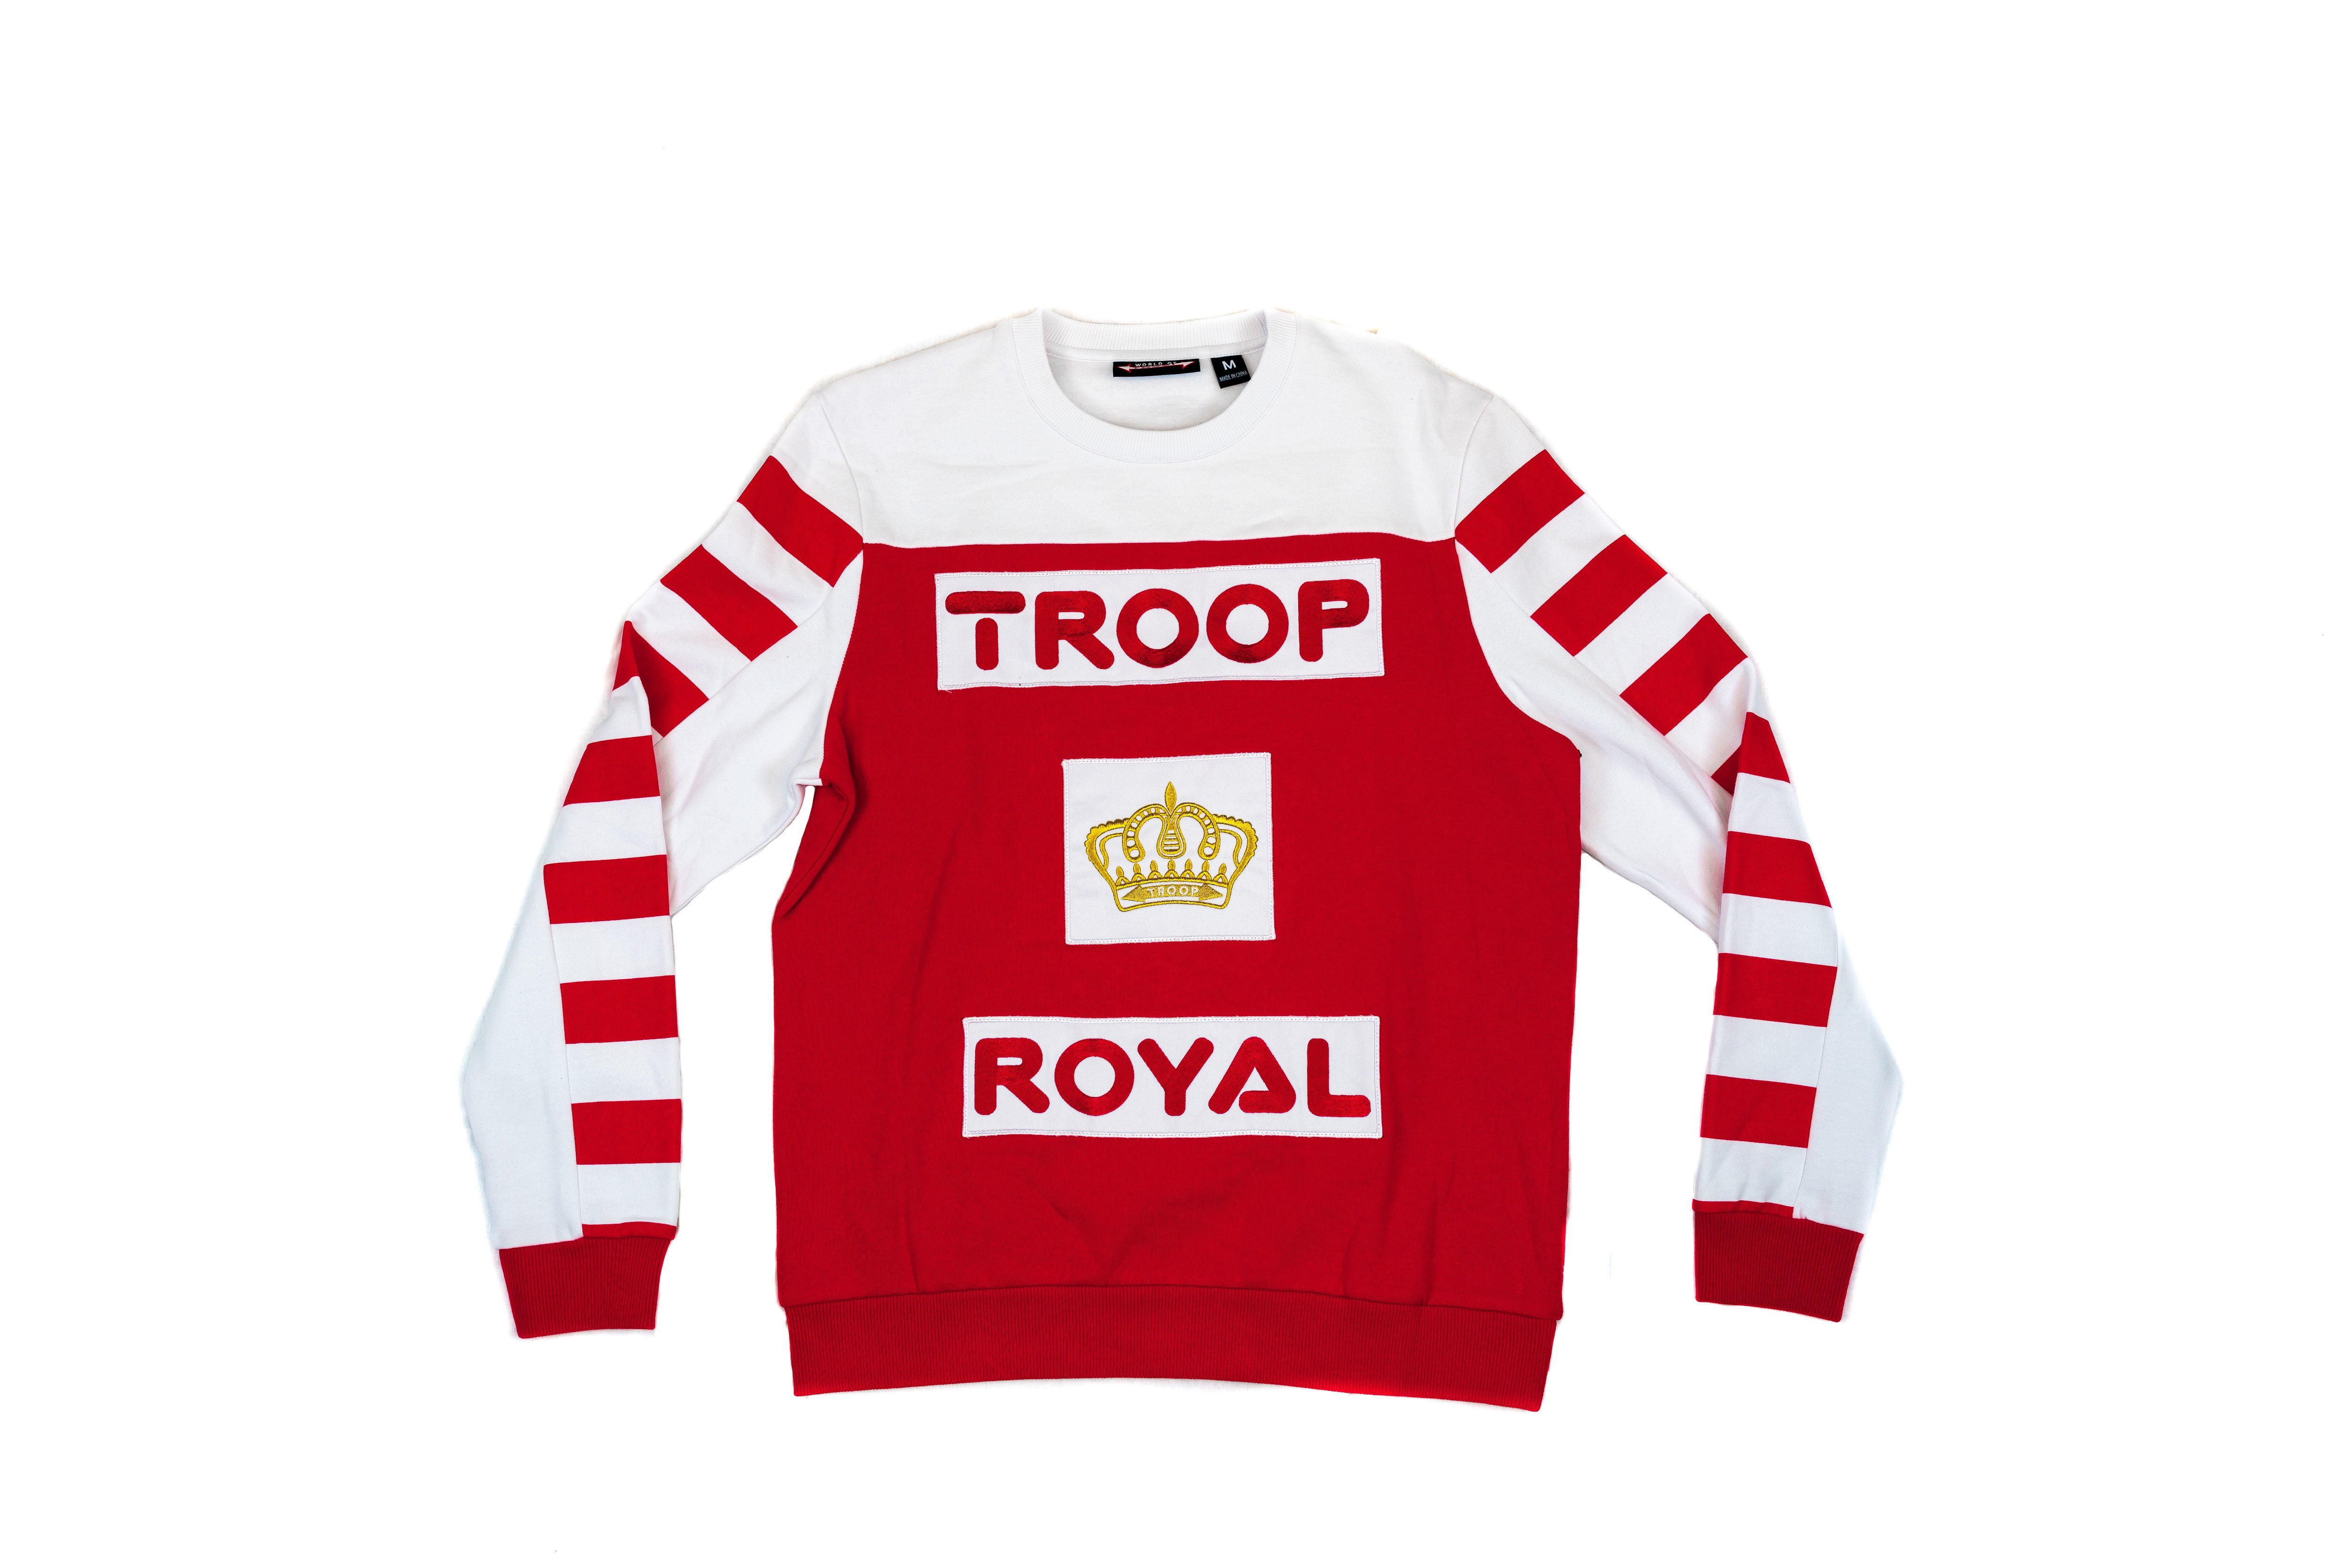 world of troop royal crew 80s apparel